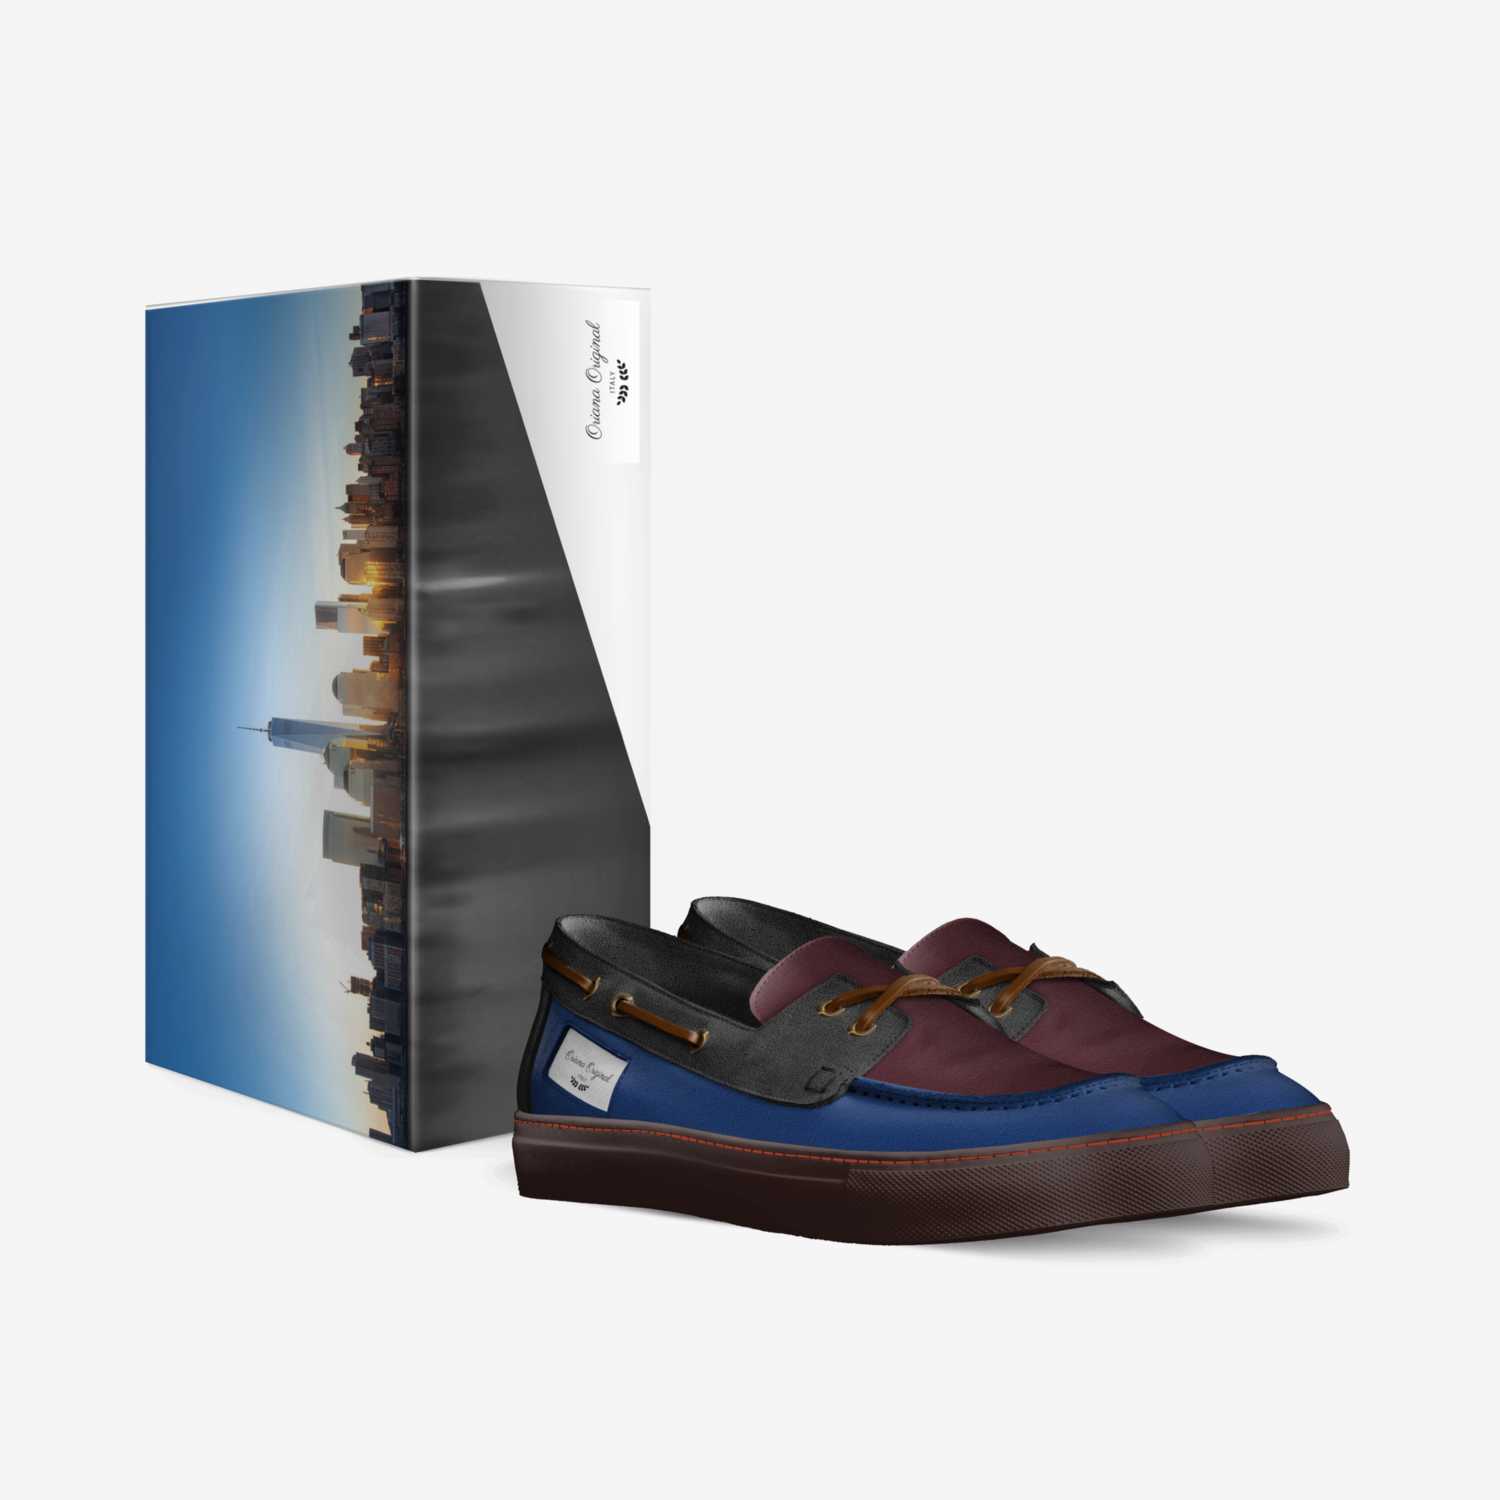 Oriana Original custom made in Italy shoes by Alex Koutsodimitrpols | Box view